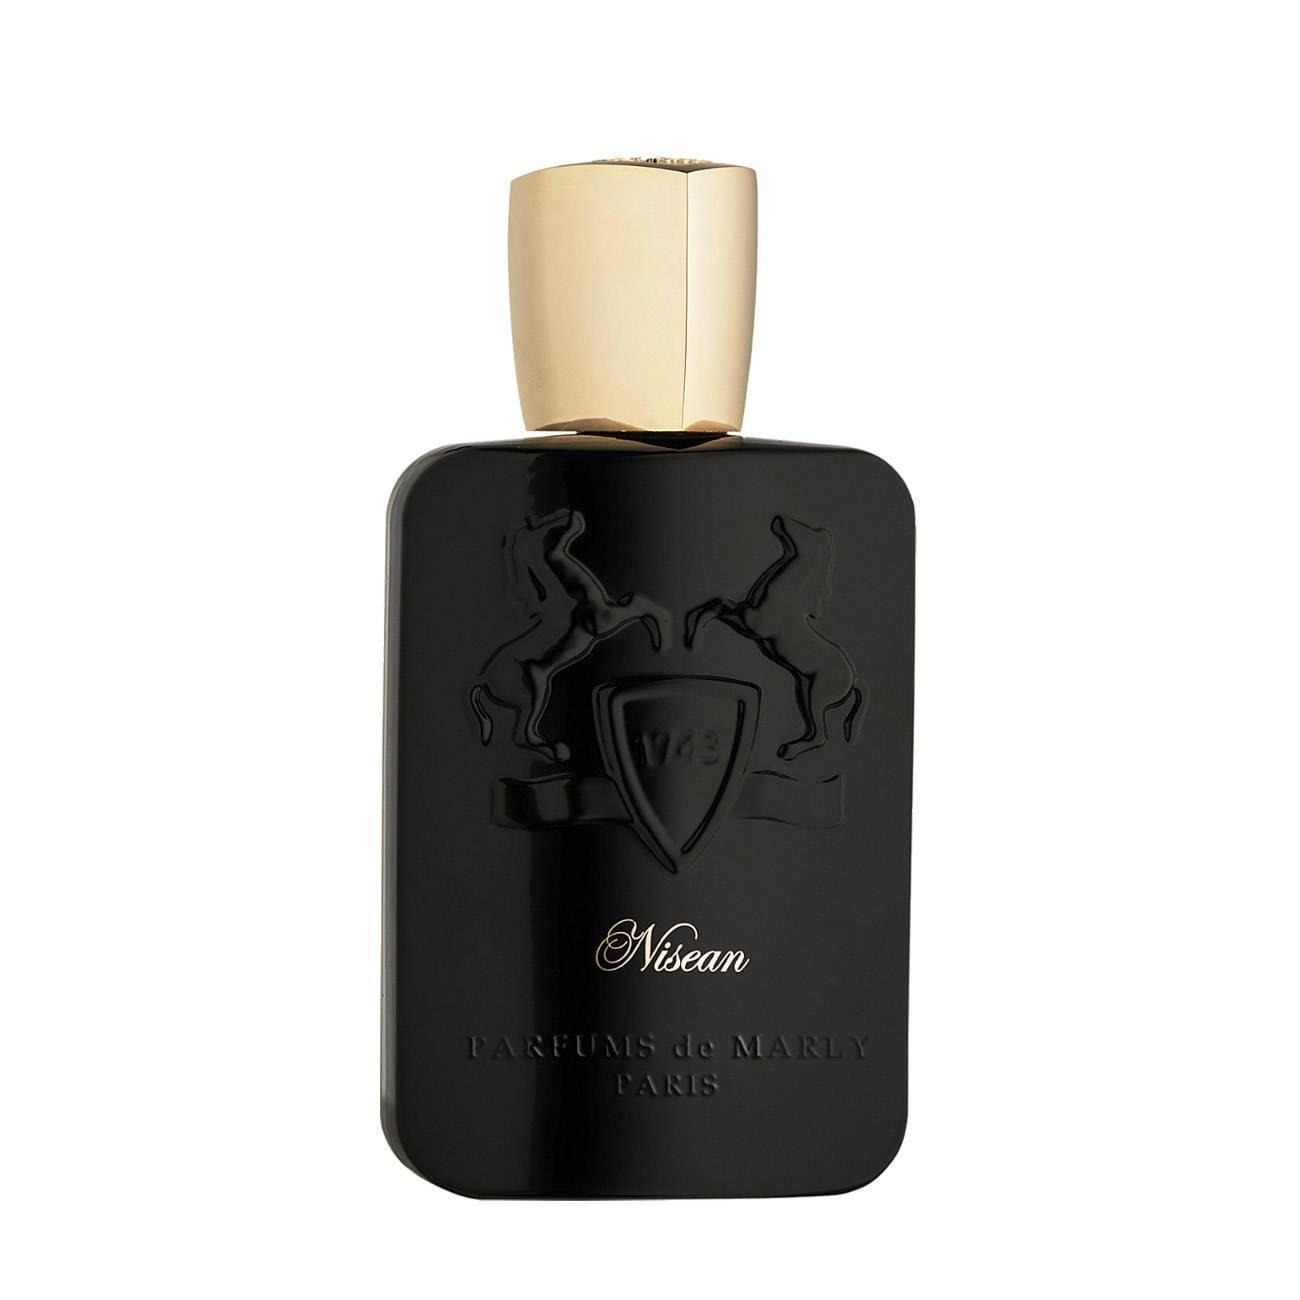 NISEAN 125 ml – Parfums de Marly bestvalue.eu